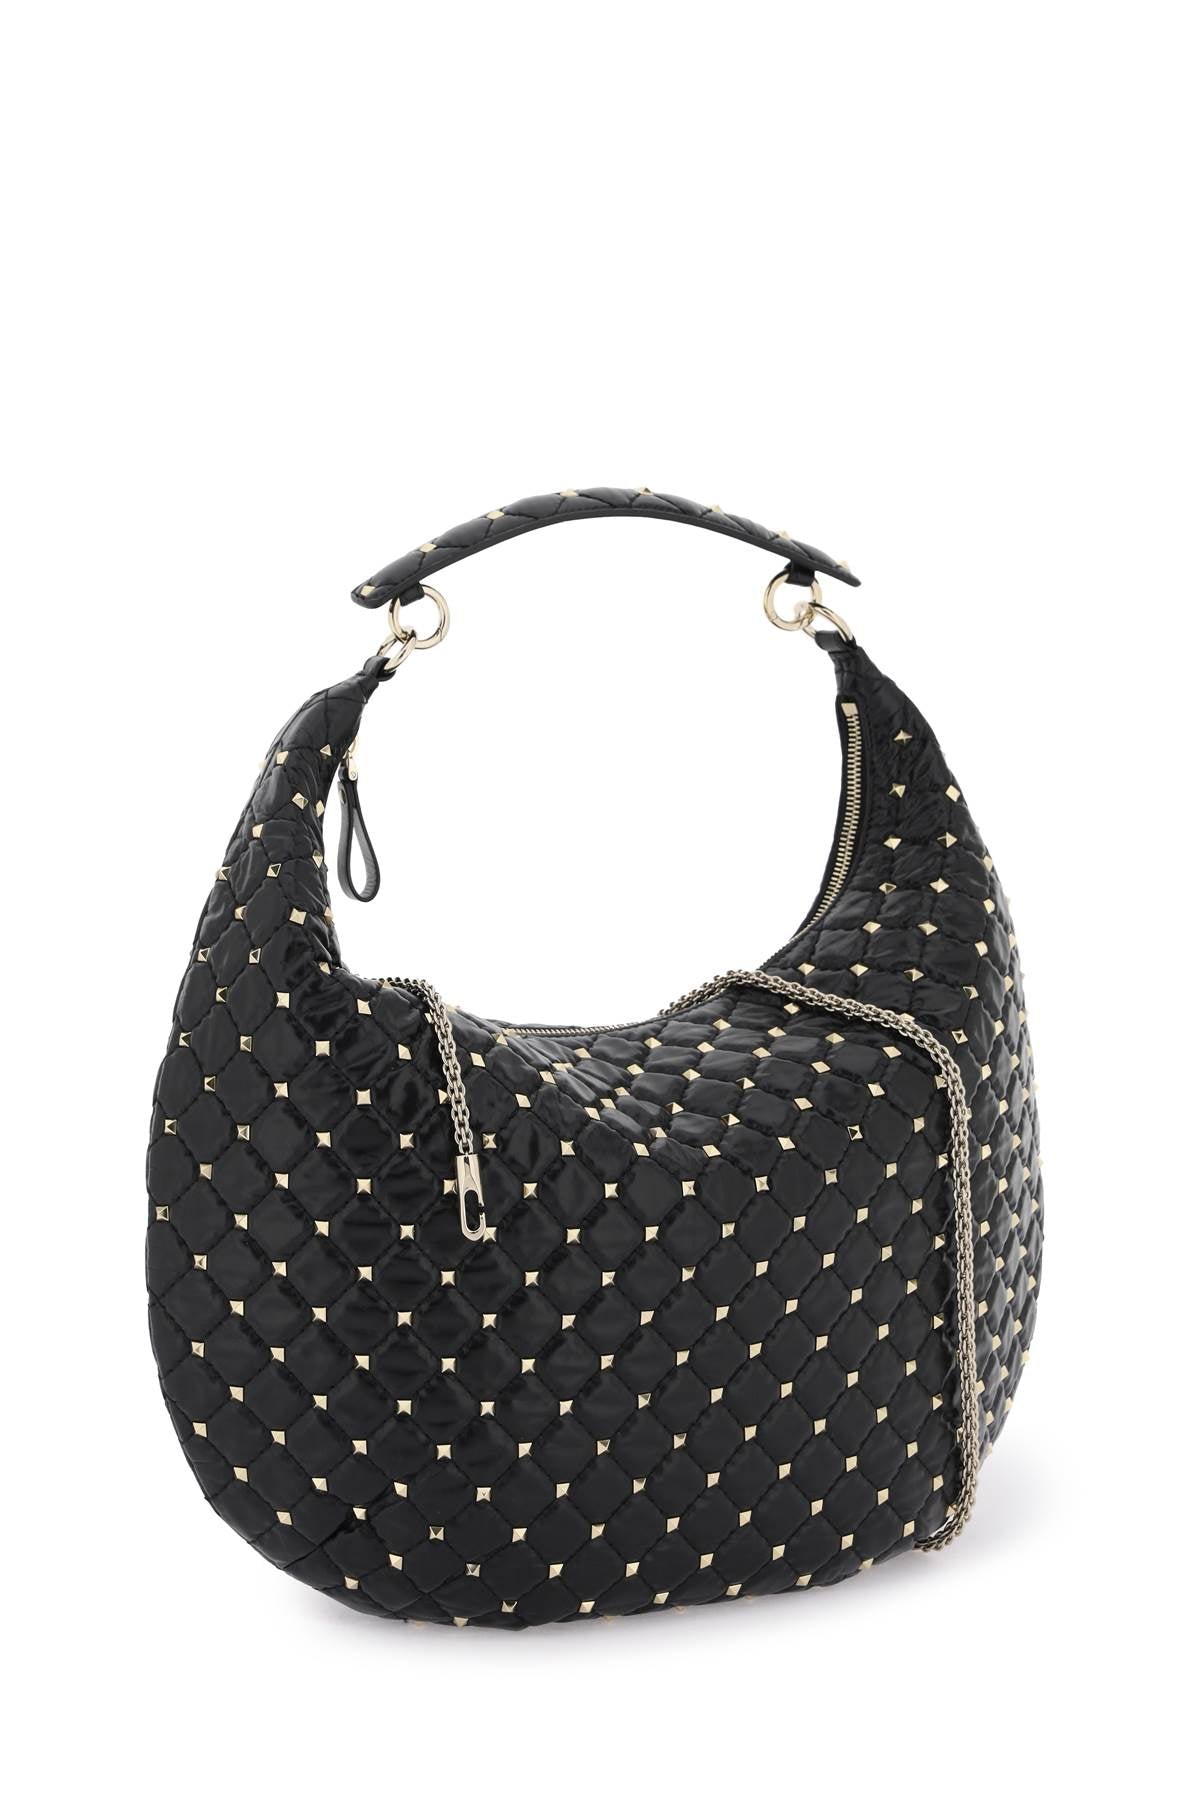 VALENTINO GARAVANI Luxurious Quilted Leather 'ROCKSTUD SPIKE' Hobo Handbag for Women